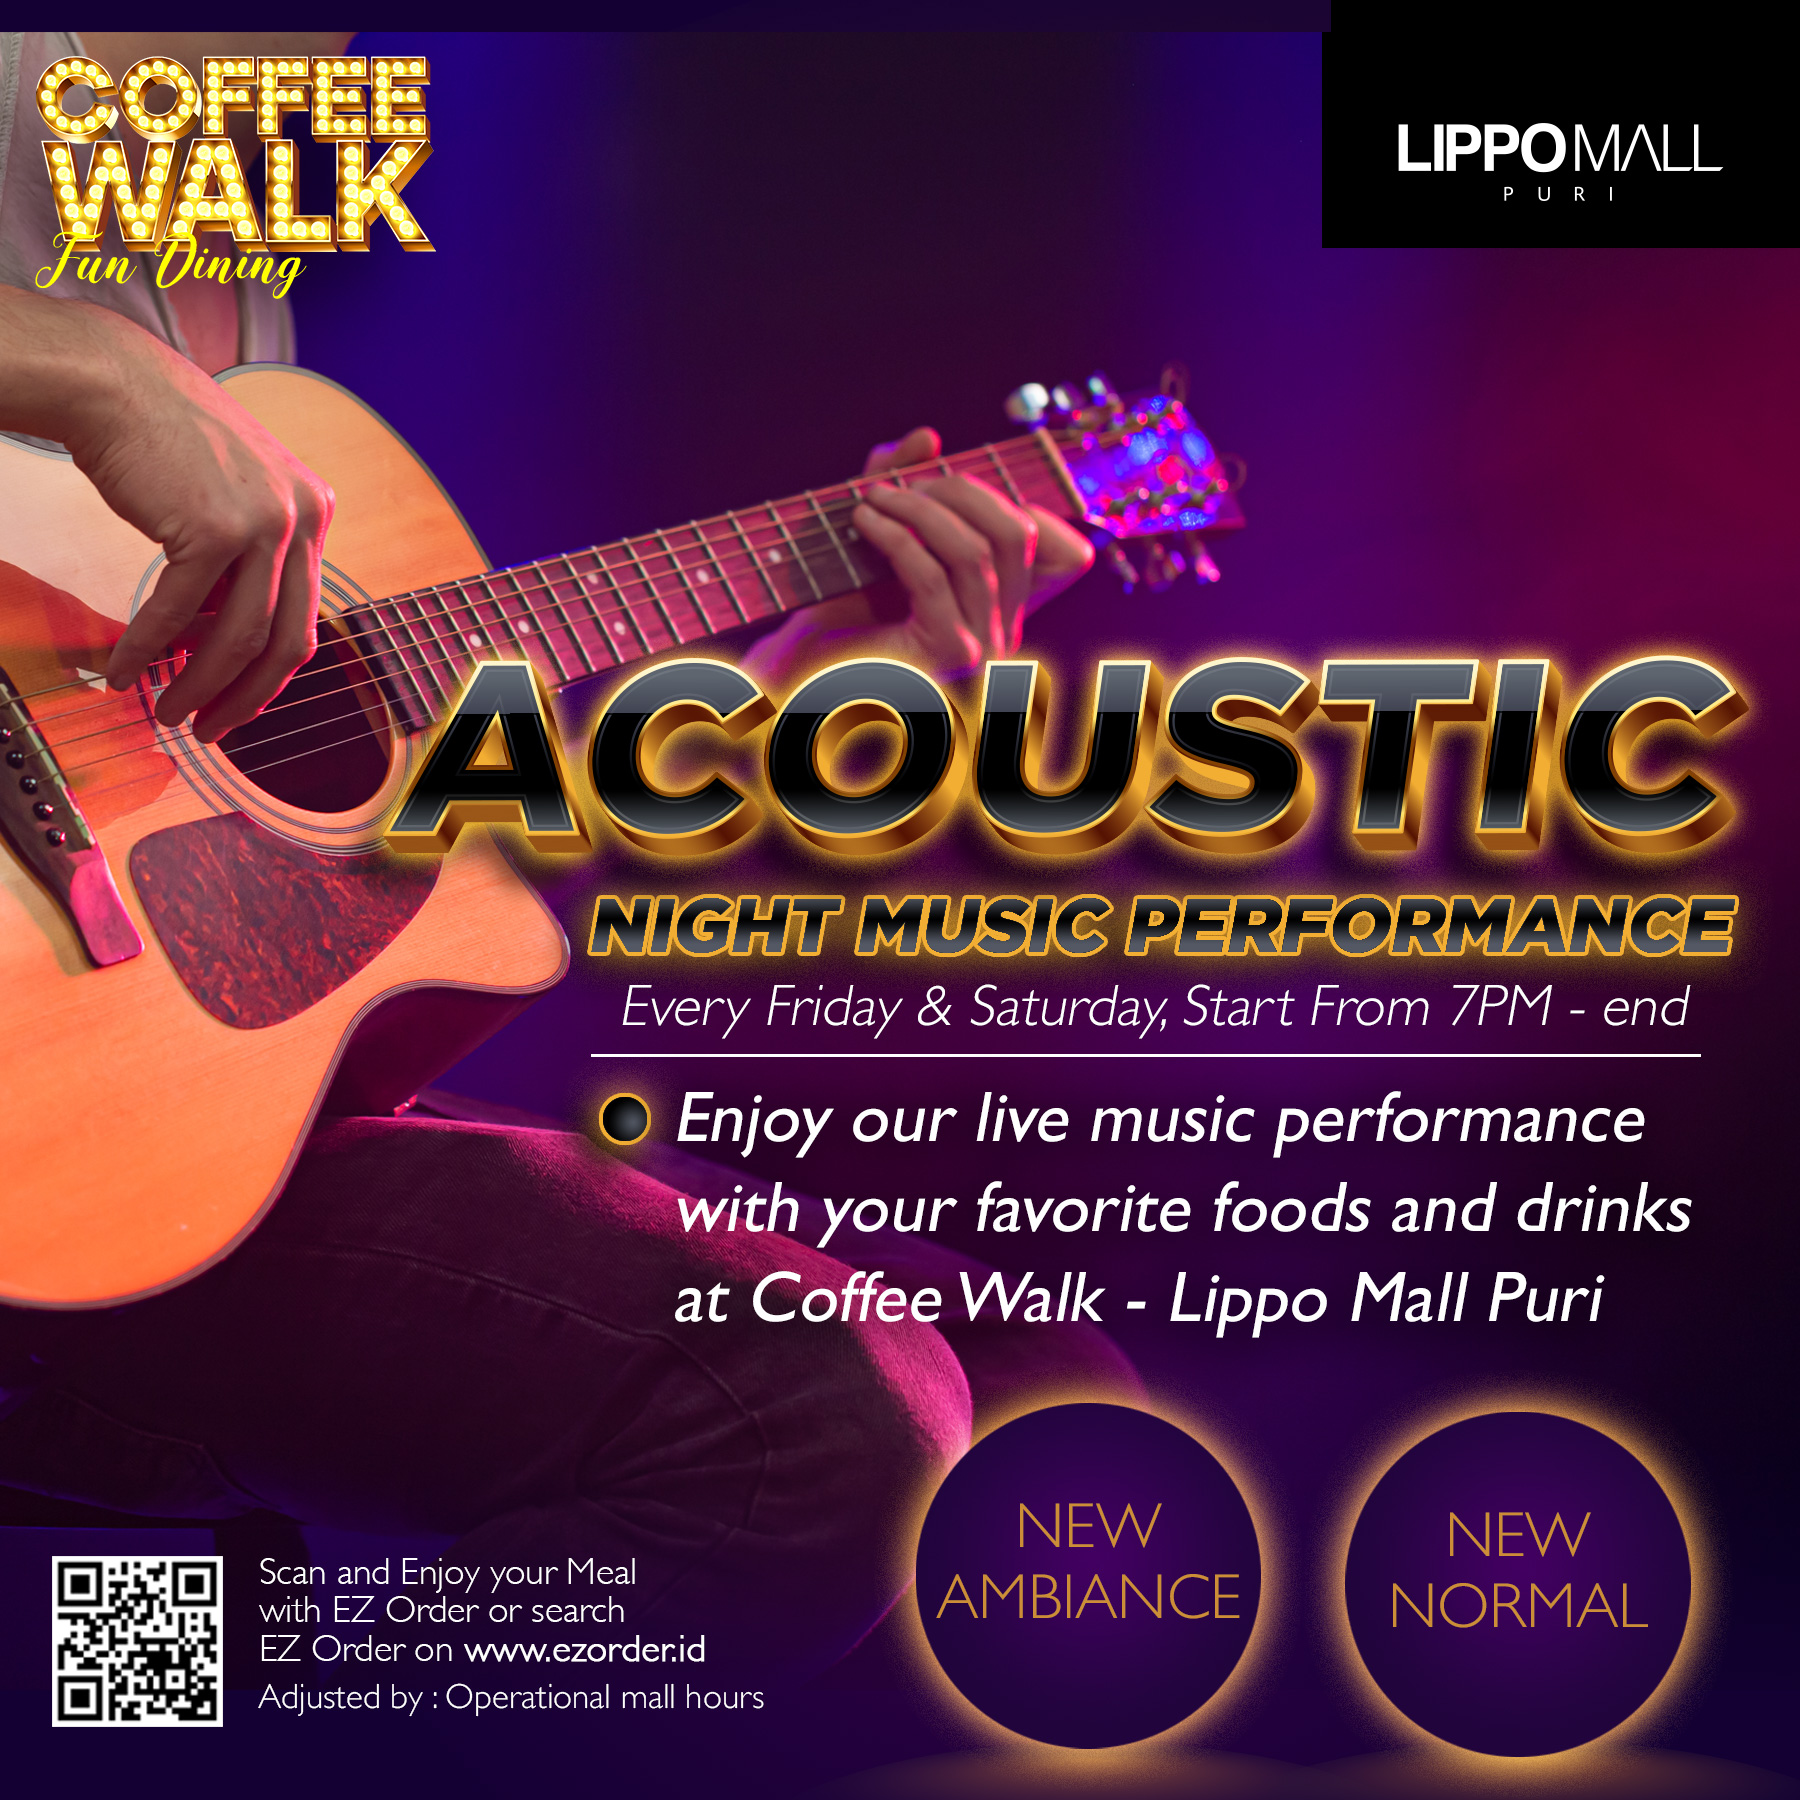 Coffee Walk Acoustic Night Music Performance in lippo mall puri st. moritz